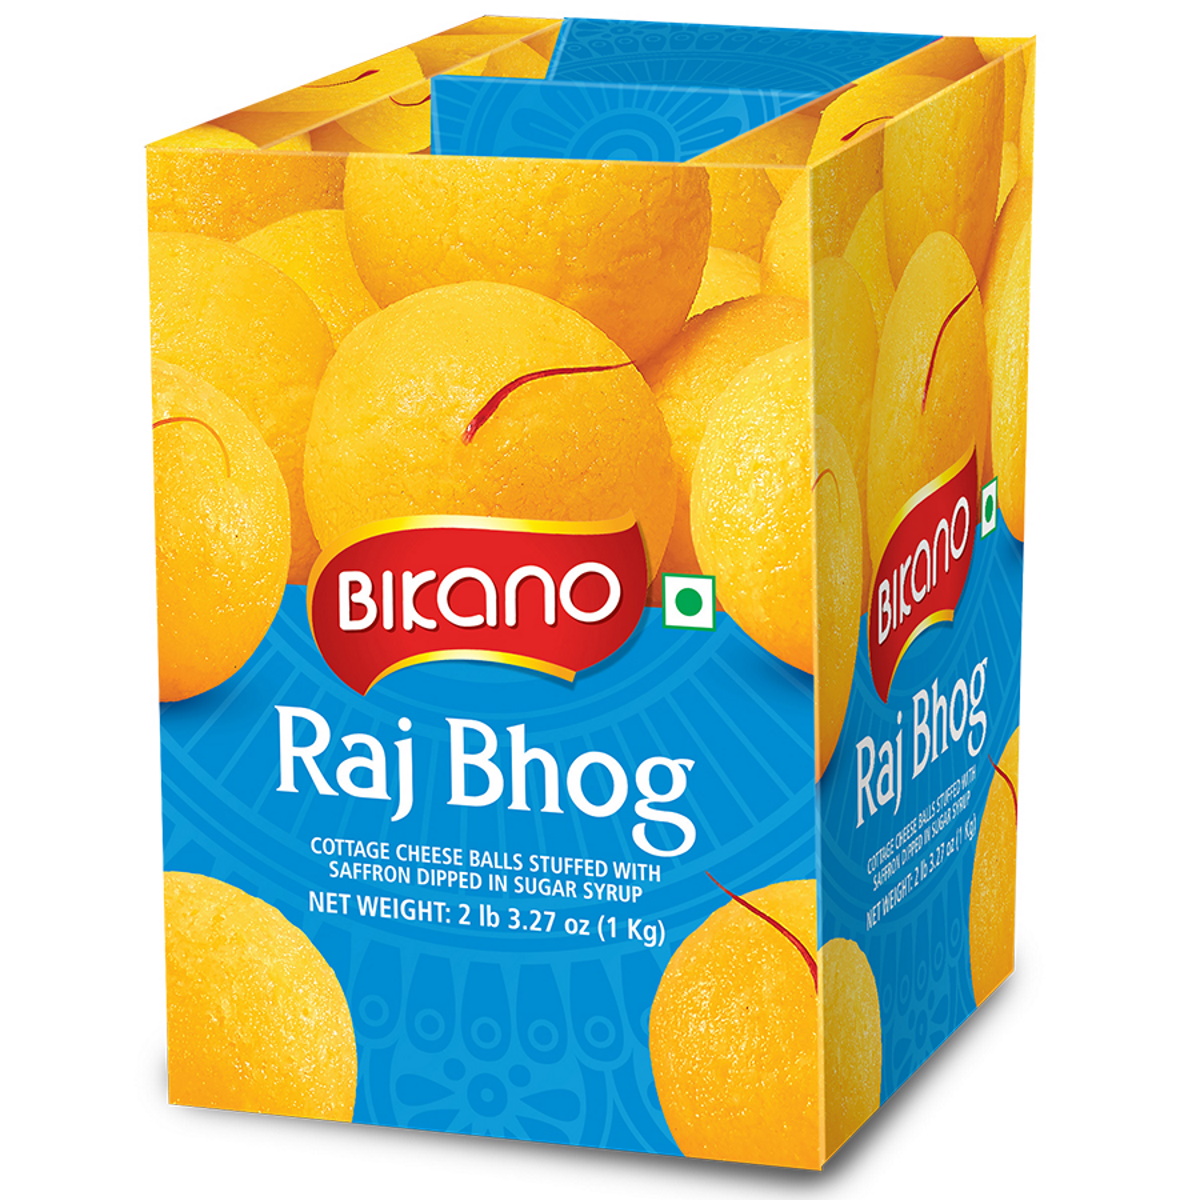 RAJ BHOG, Bikano (РАДЖ БХОГ творожные шарики в сахарном сиропе, Бикано), 1 кг.